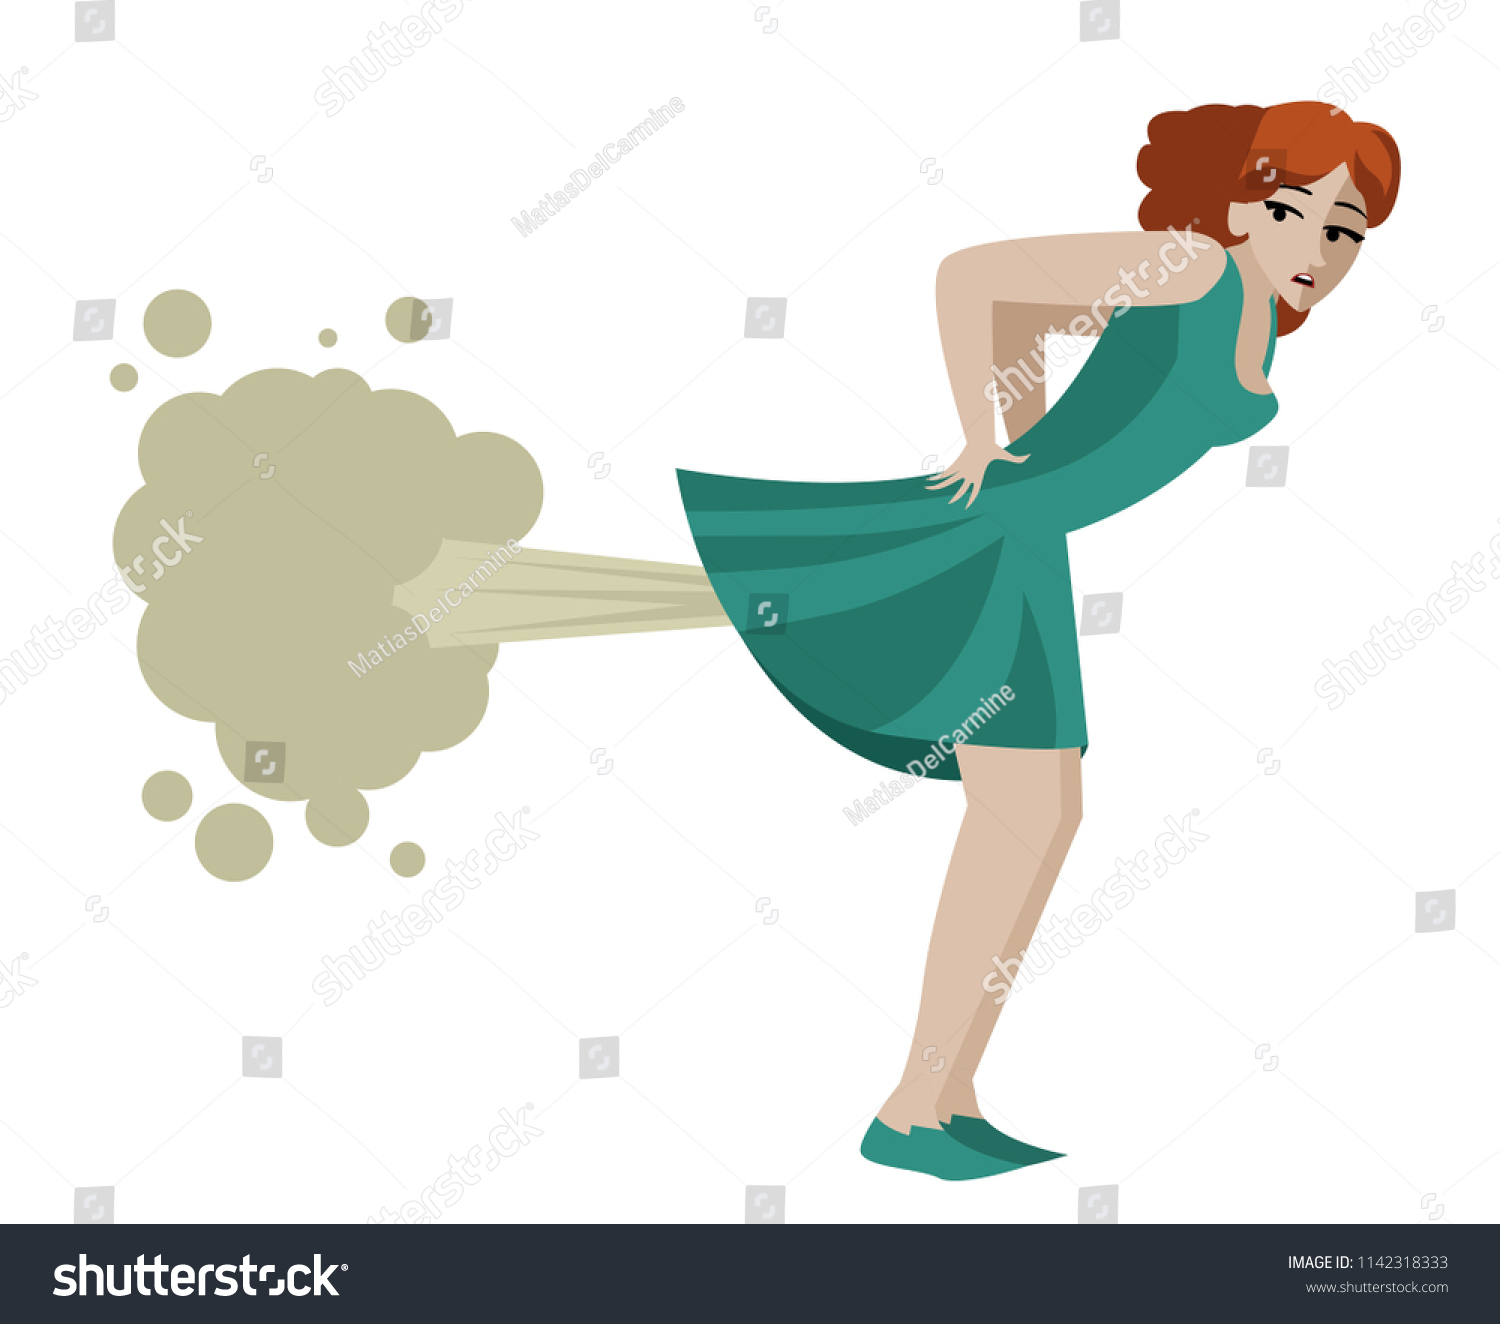 Woman Throwing Fart Stock-vektor (royaltyfri) 1142318333 Shutterstock.